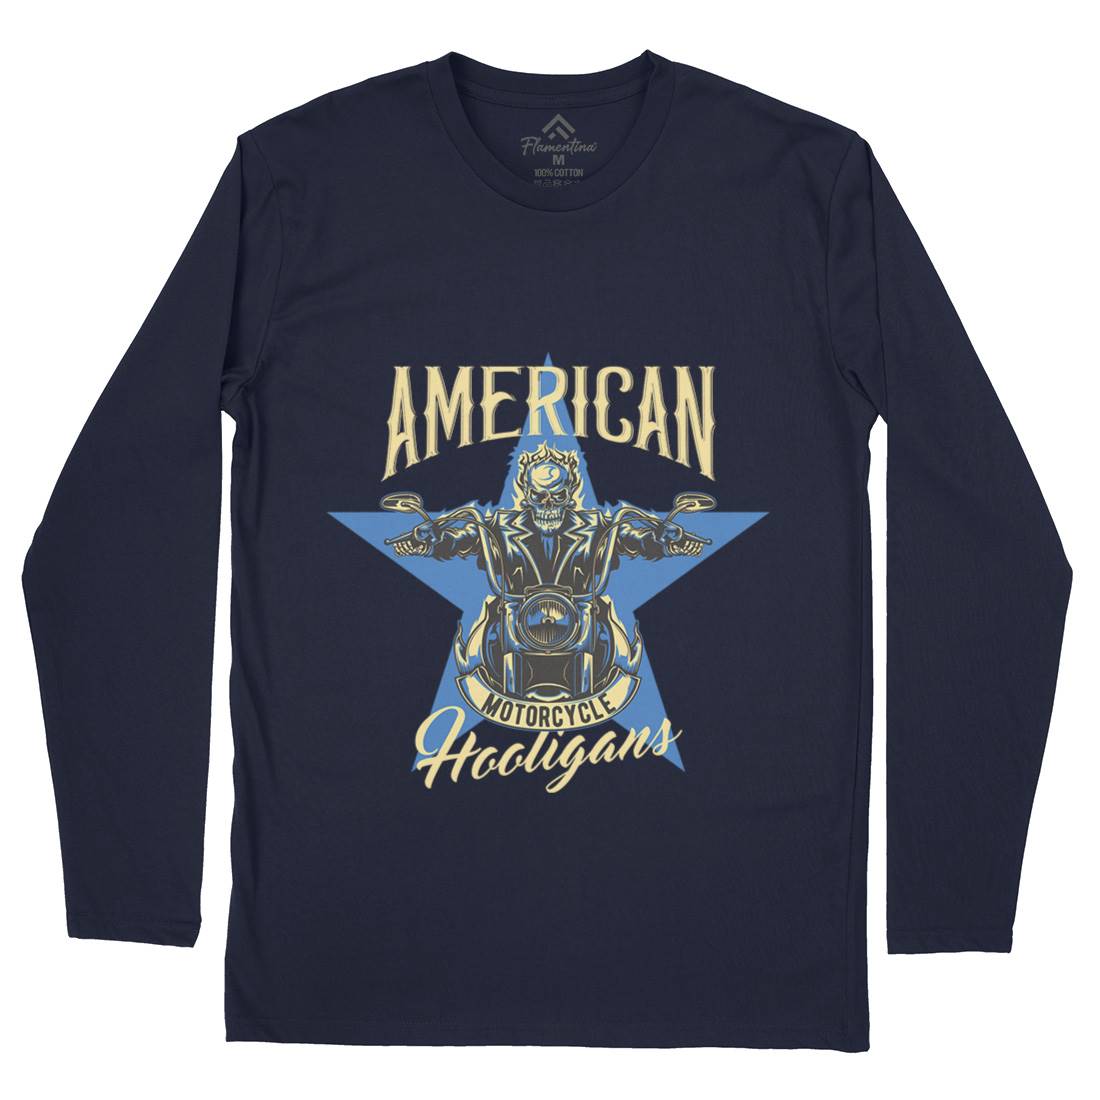 American Mens Long Sleeve T-Shirt Motorcycles B144